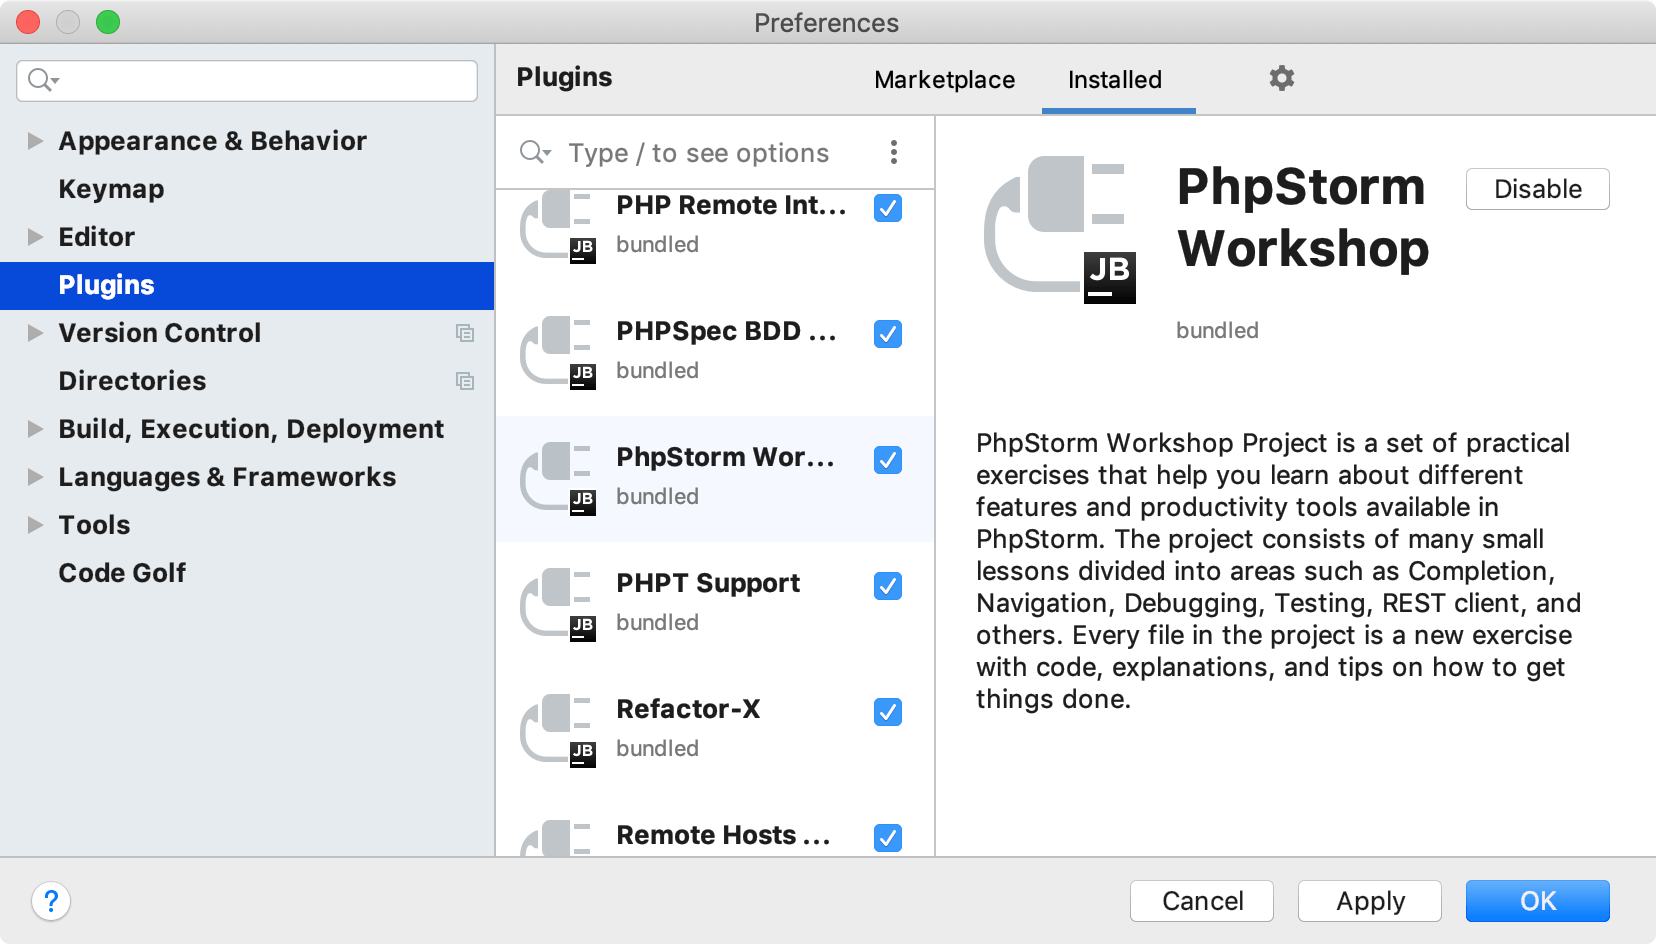 The Plugins settings dialog